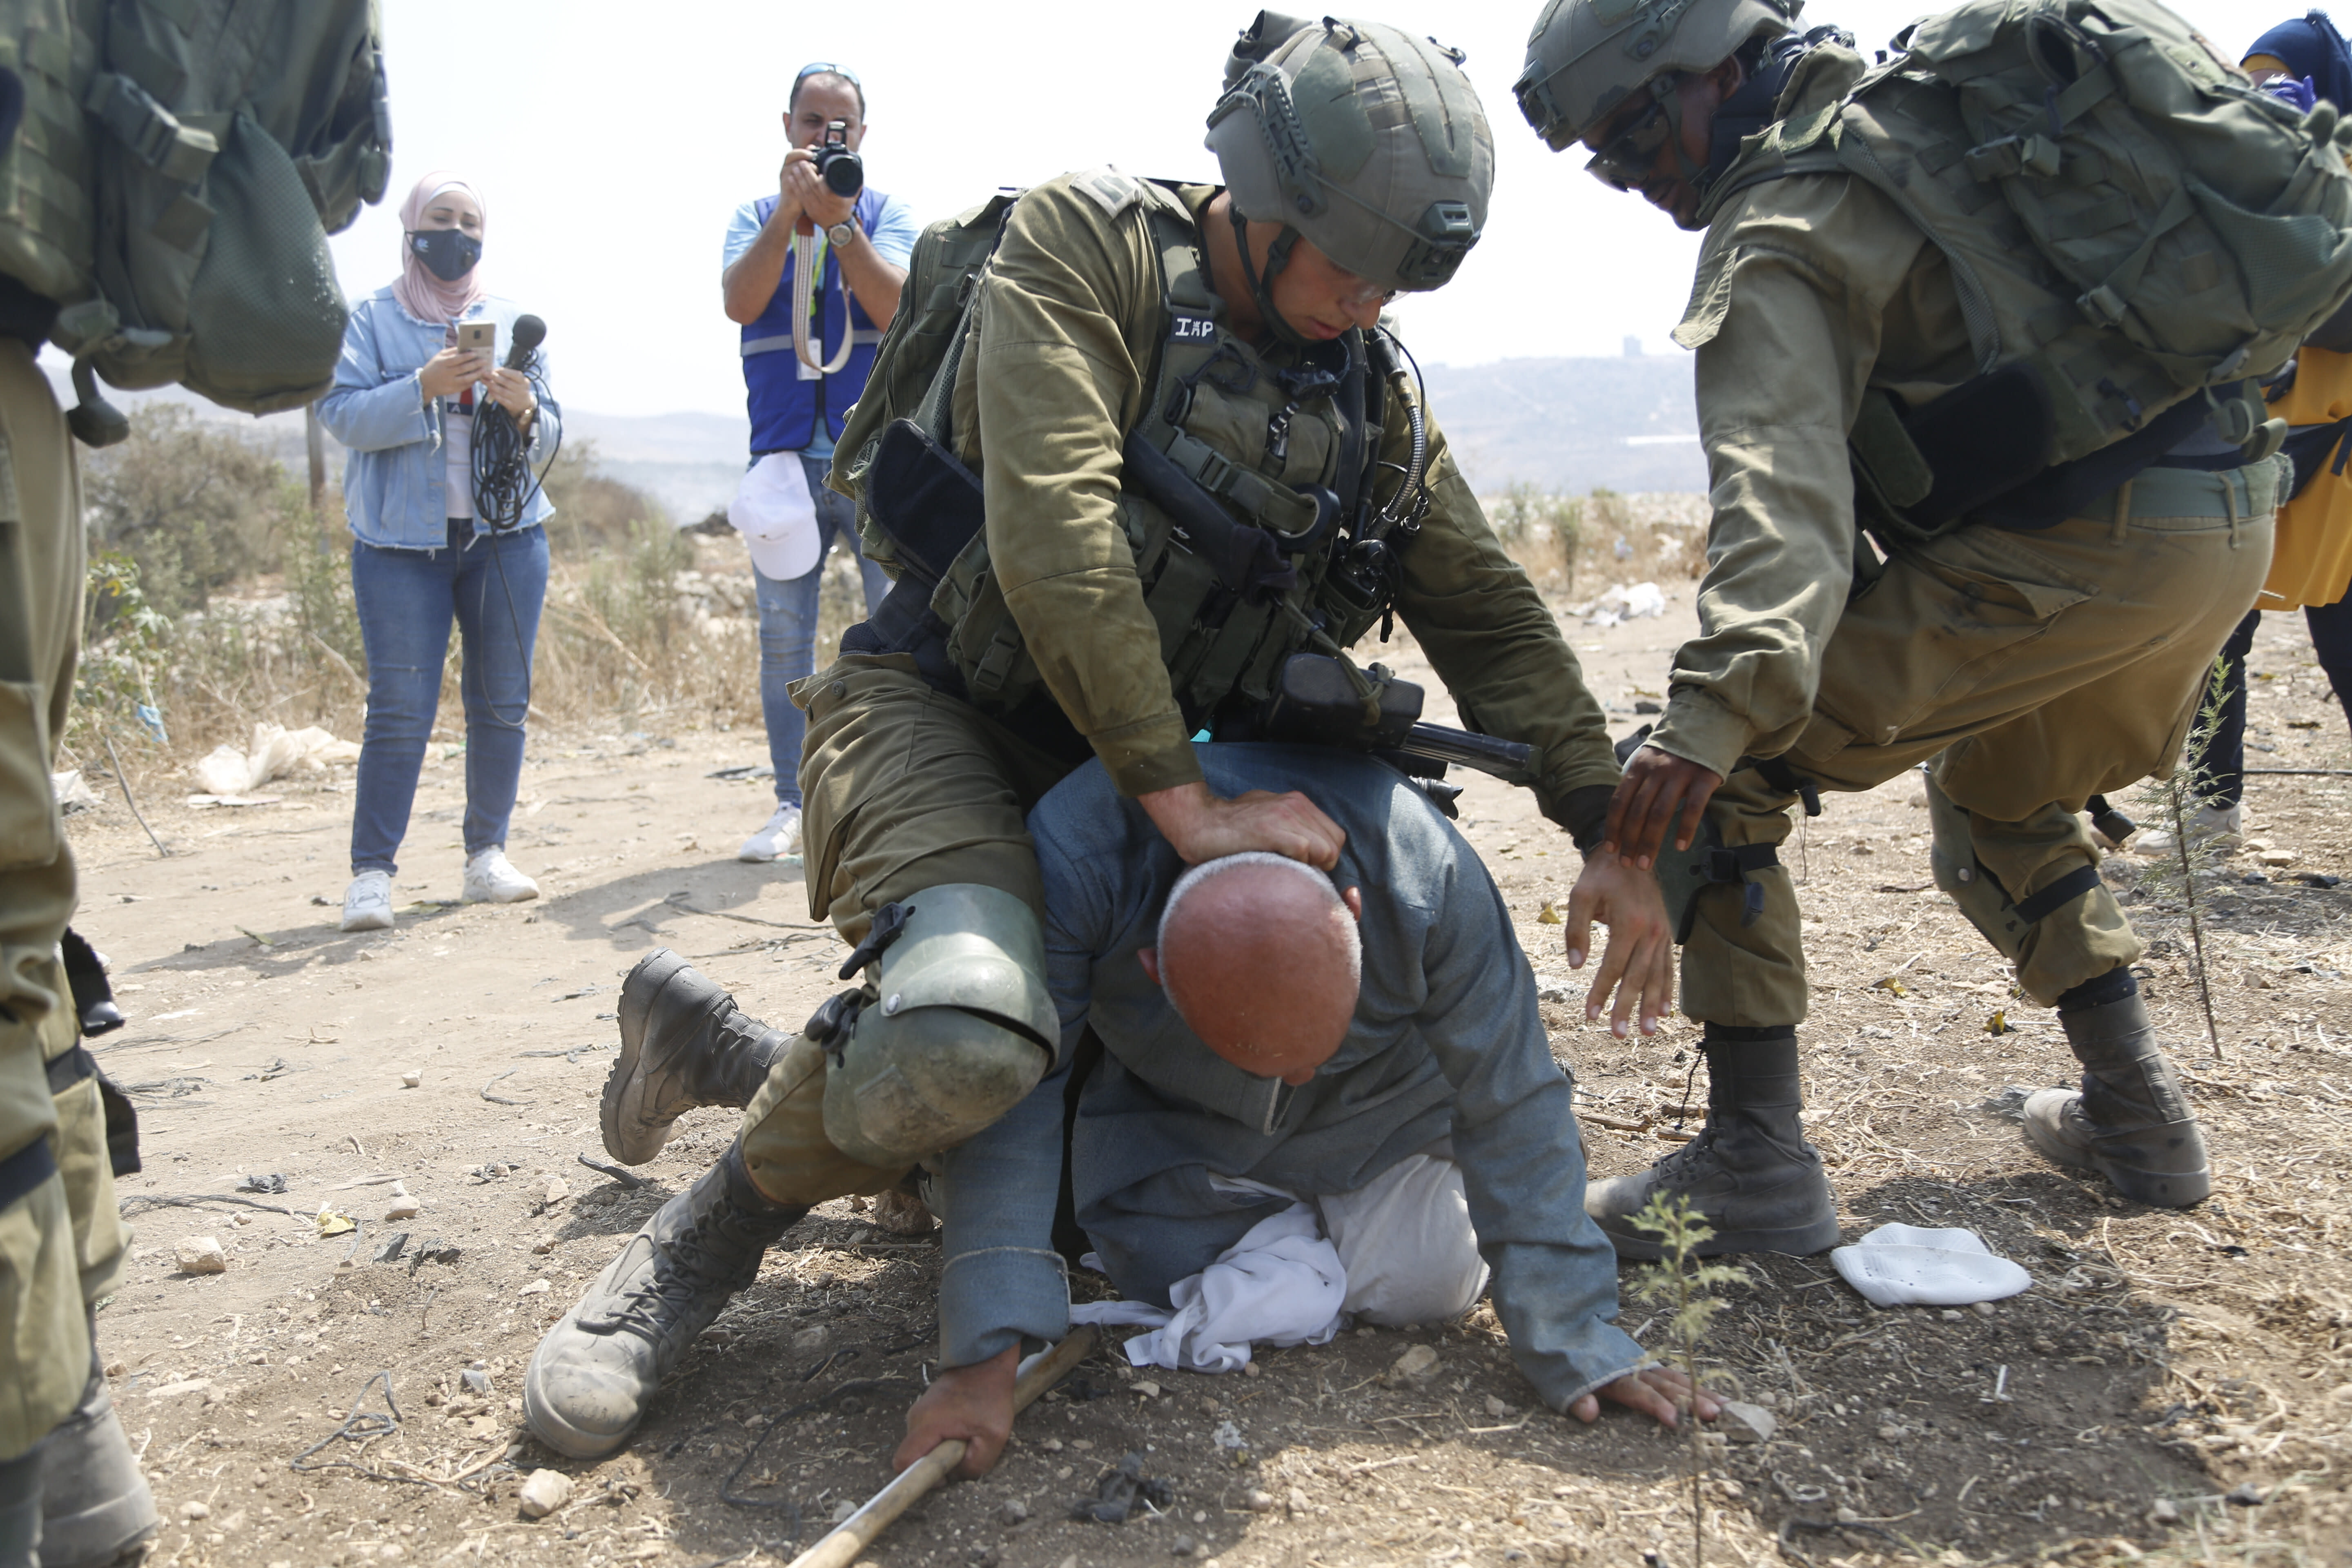 Video shows Israeli soldier kneeling on protester's neck